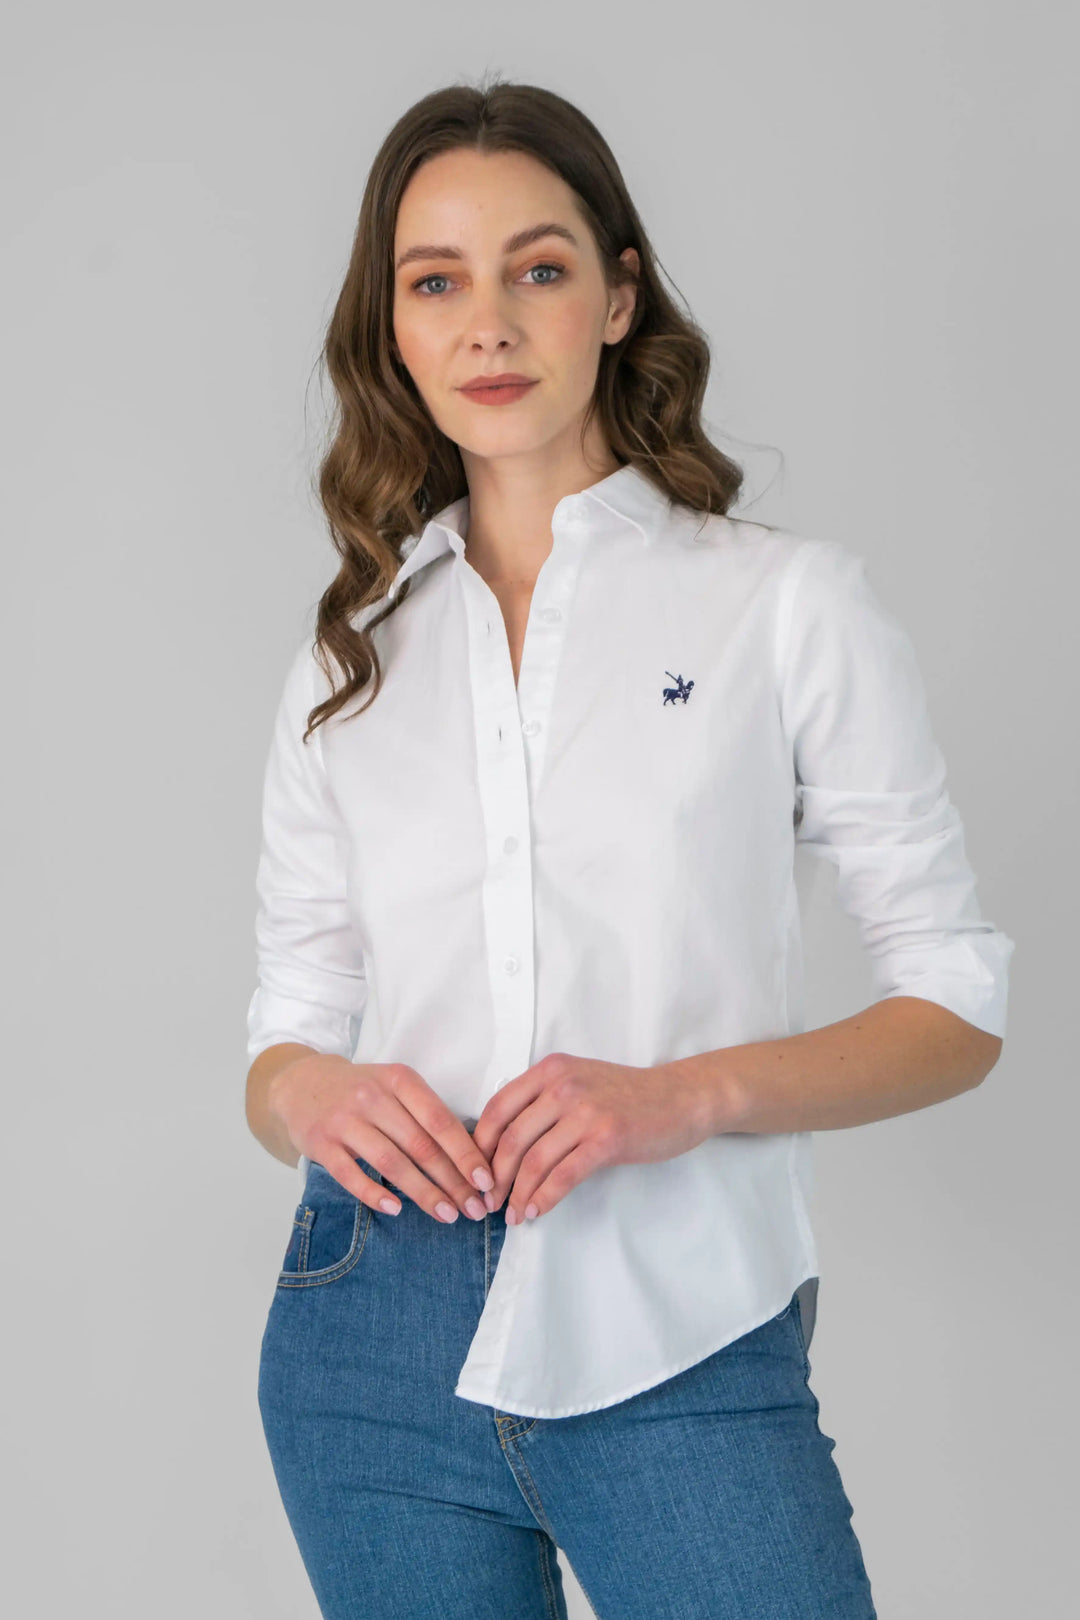 Camiseta blanca mujer algodón